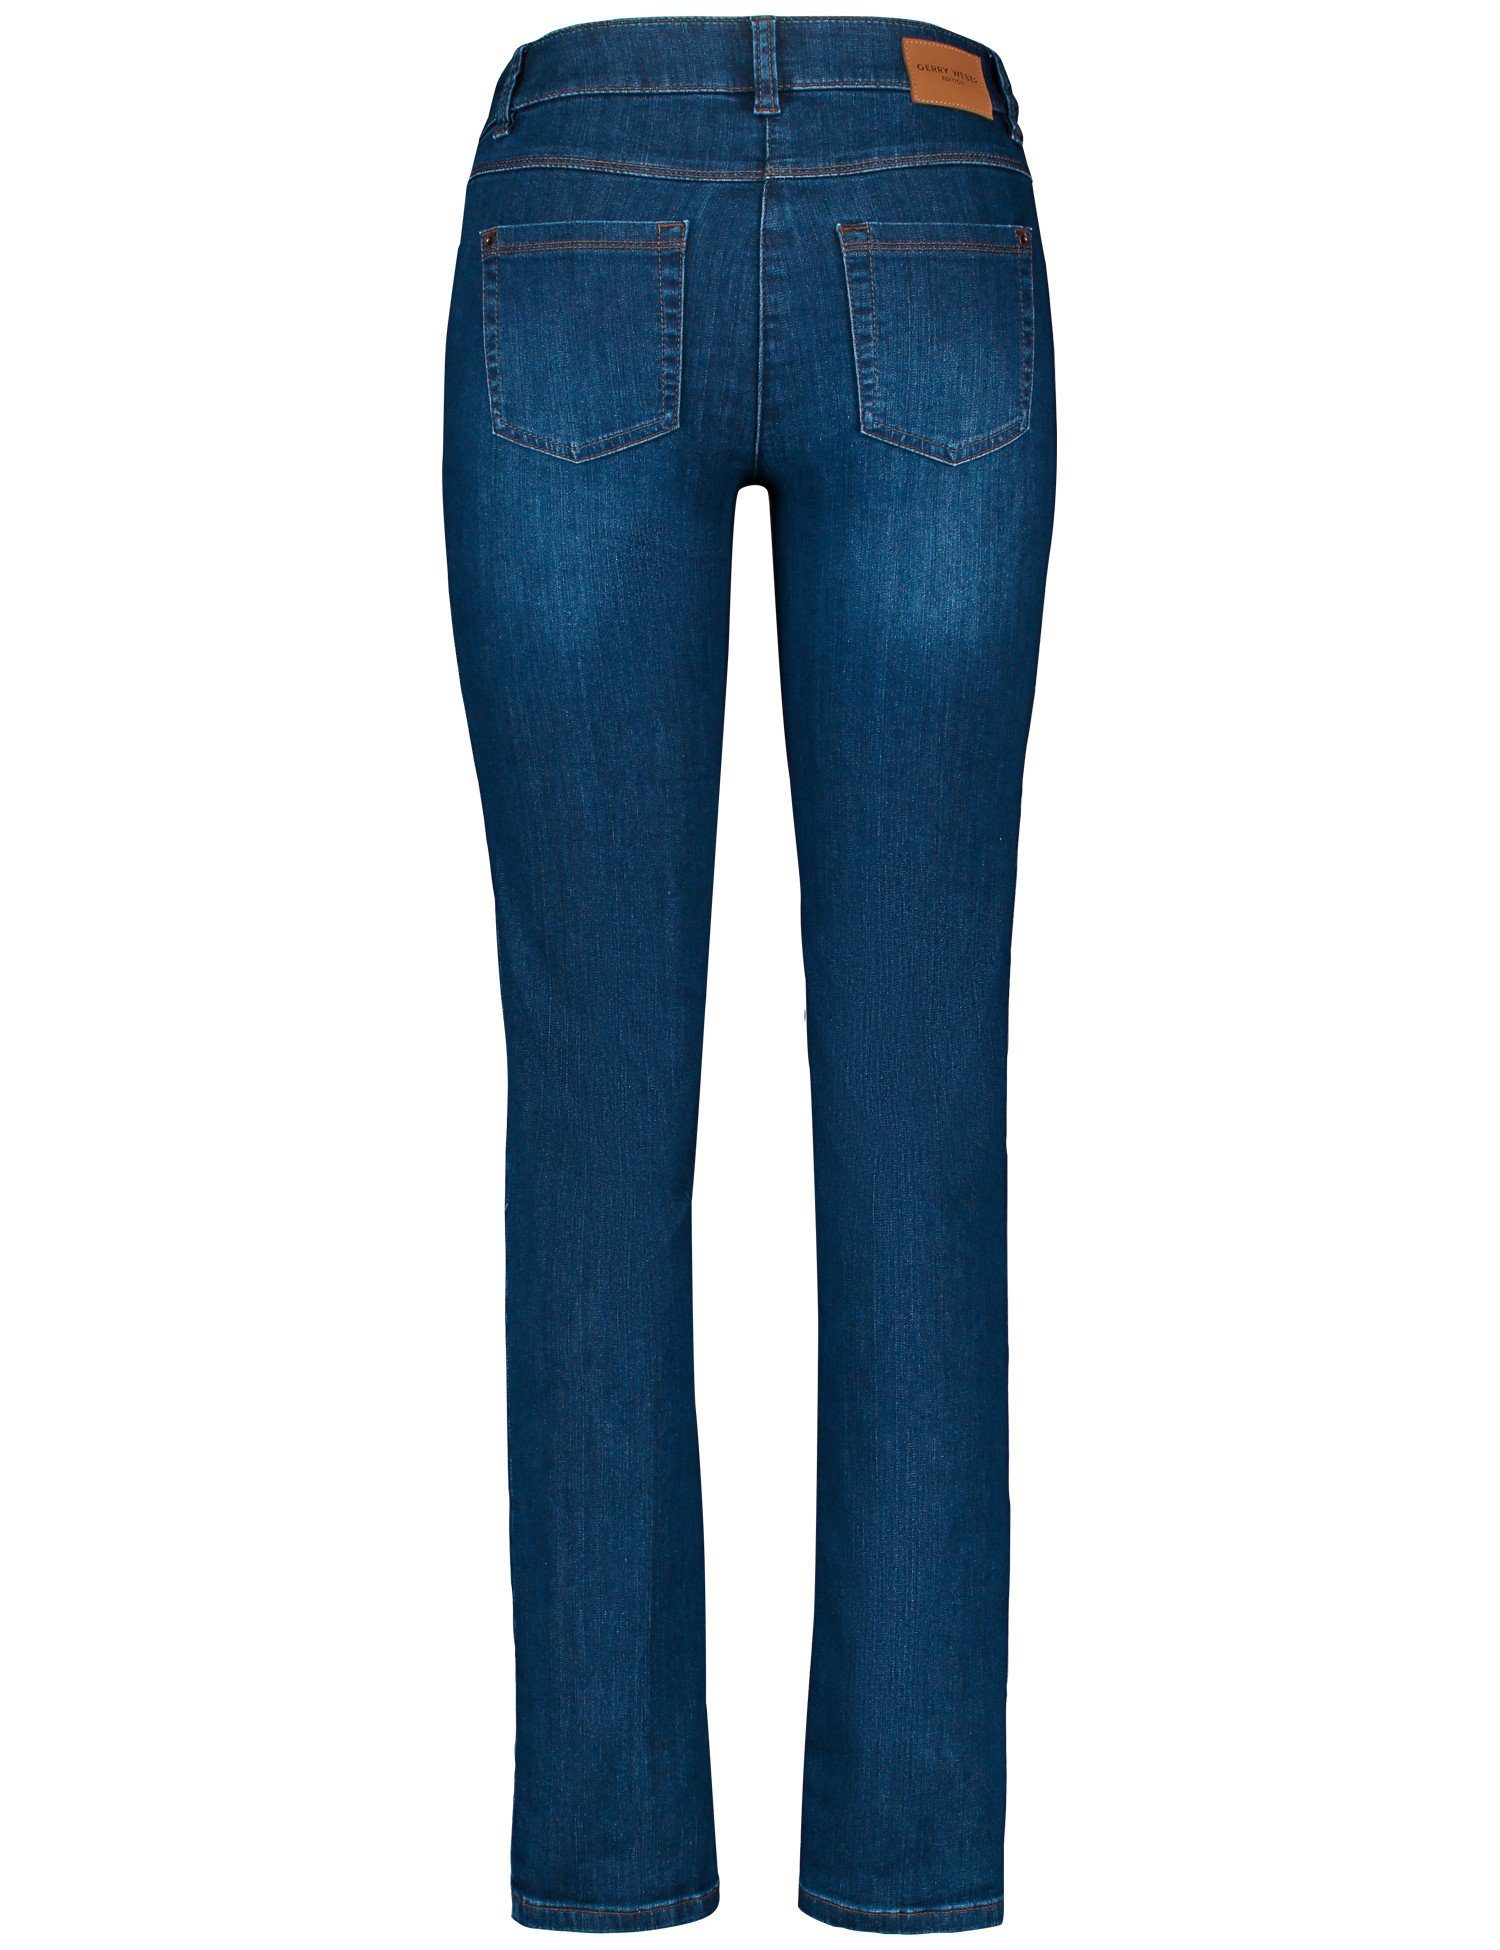 GERRY Best4me Stretch-Jeans 5-Pocket WEBER Jeans denim Slimfit dark mit blue use